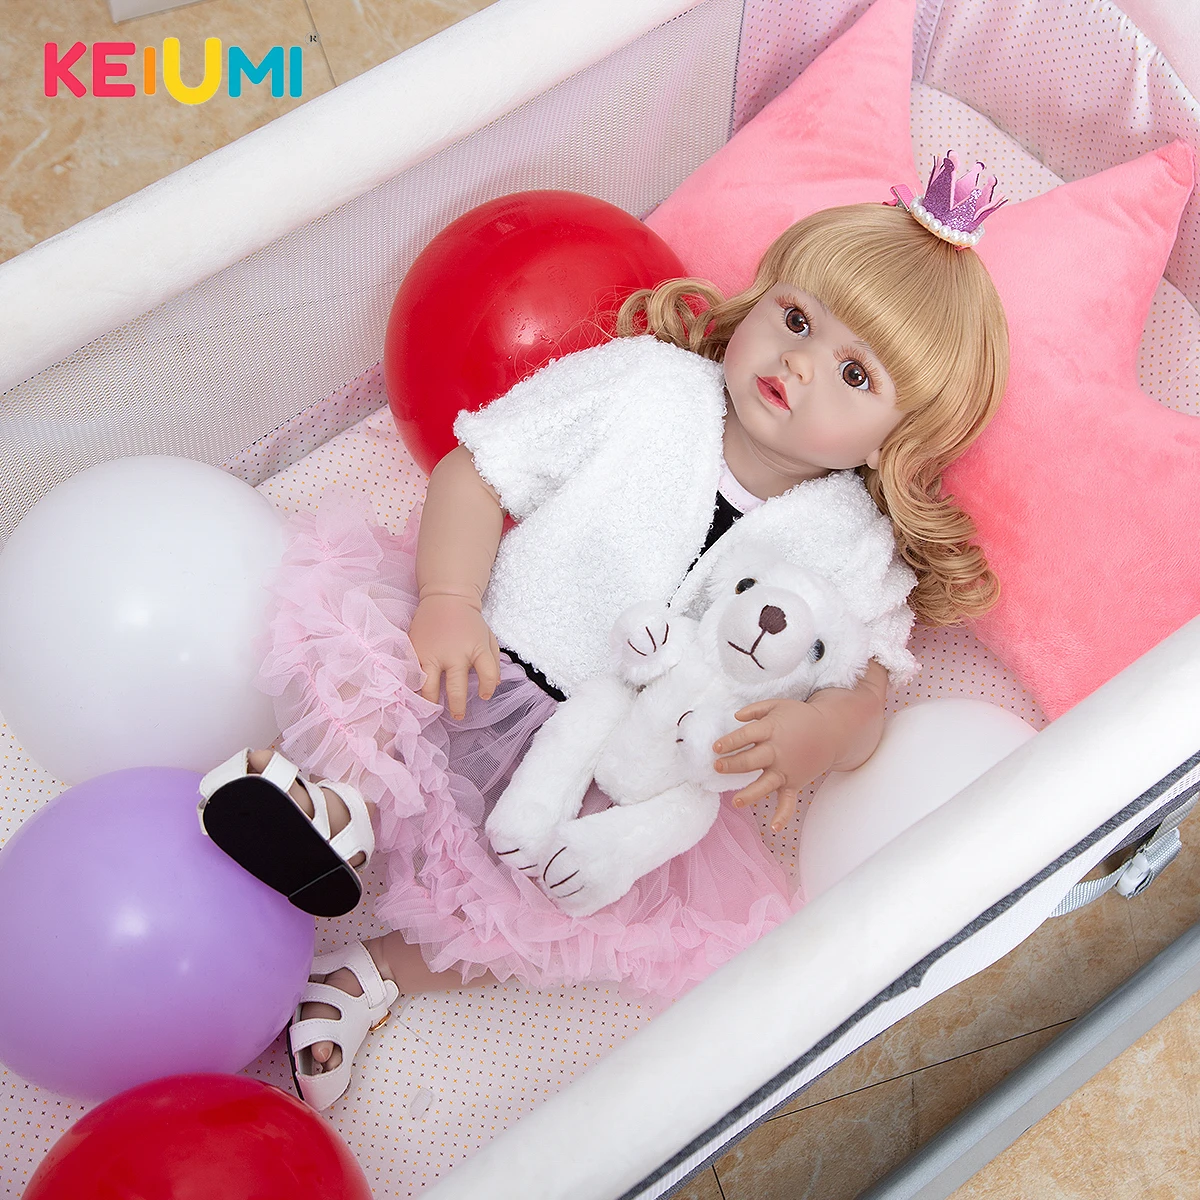 KEIUMI Reborn Dolls Full Vinyl Body 57cm Lifelike Fashion Princess Baby Doll Boneca Reborn Toy For Children's Day Gift 3